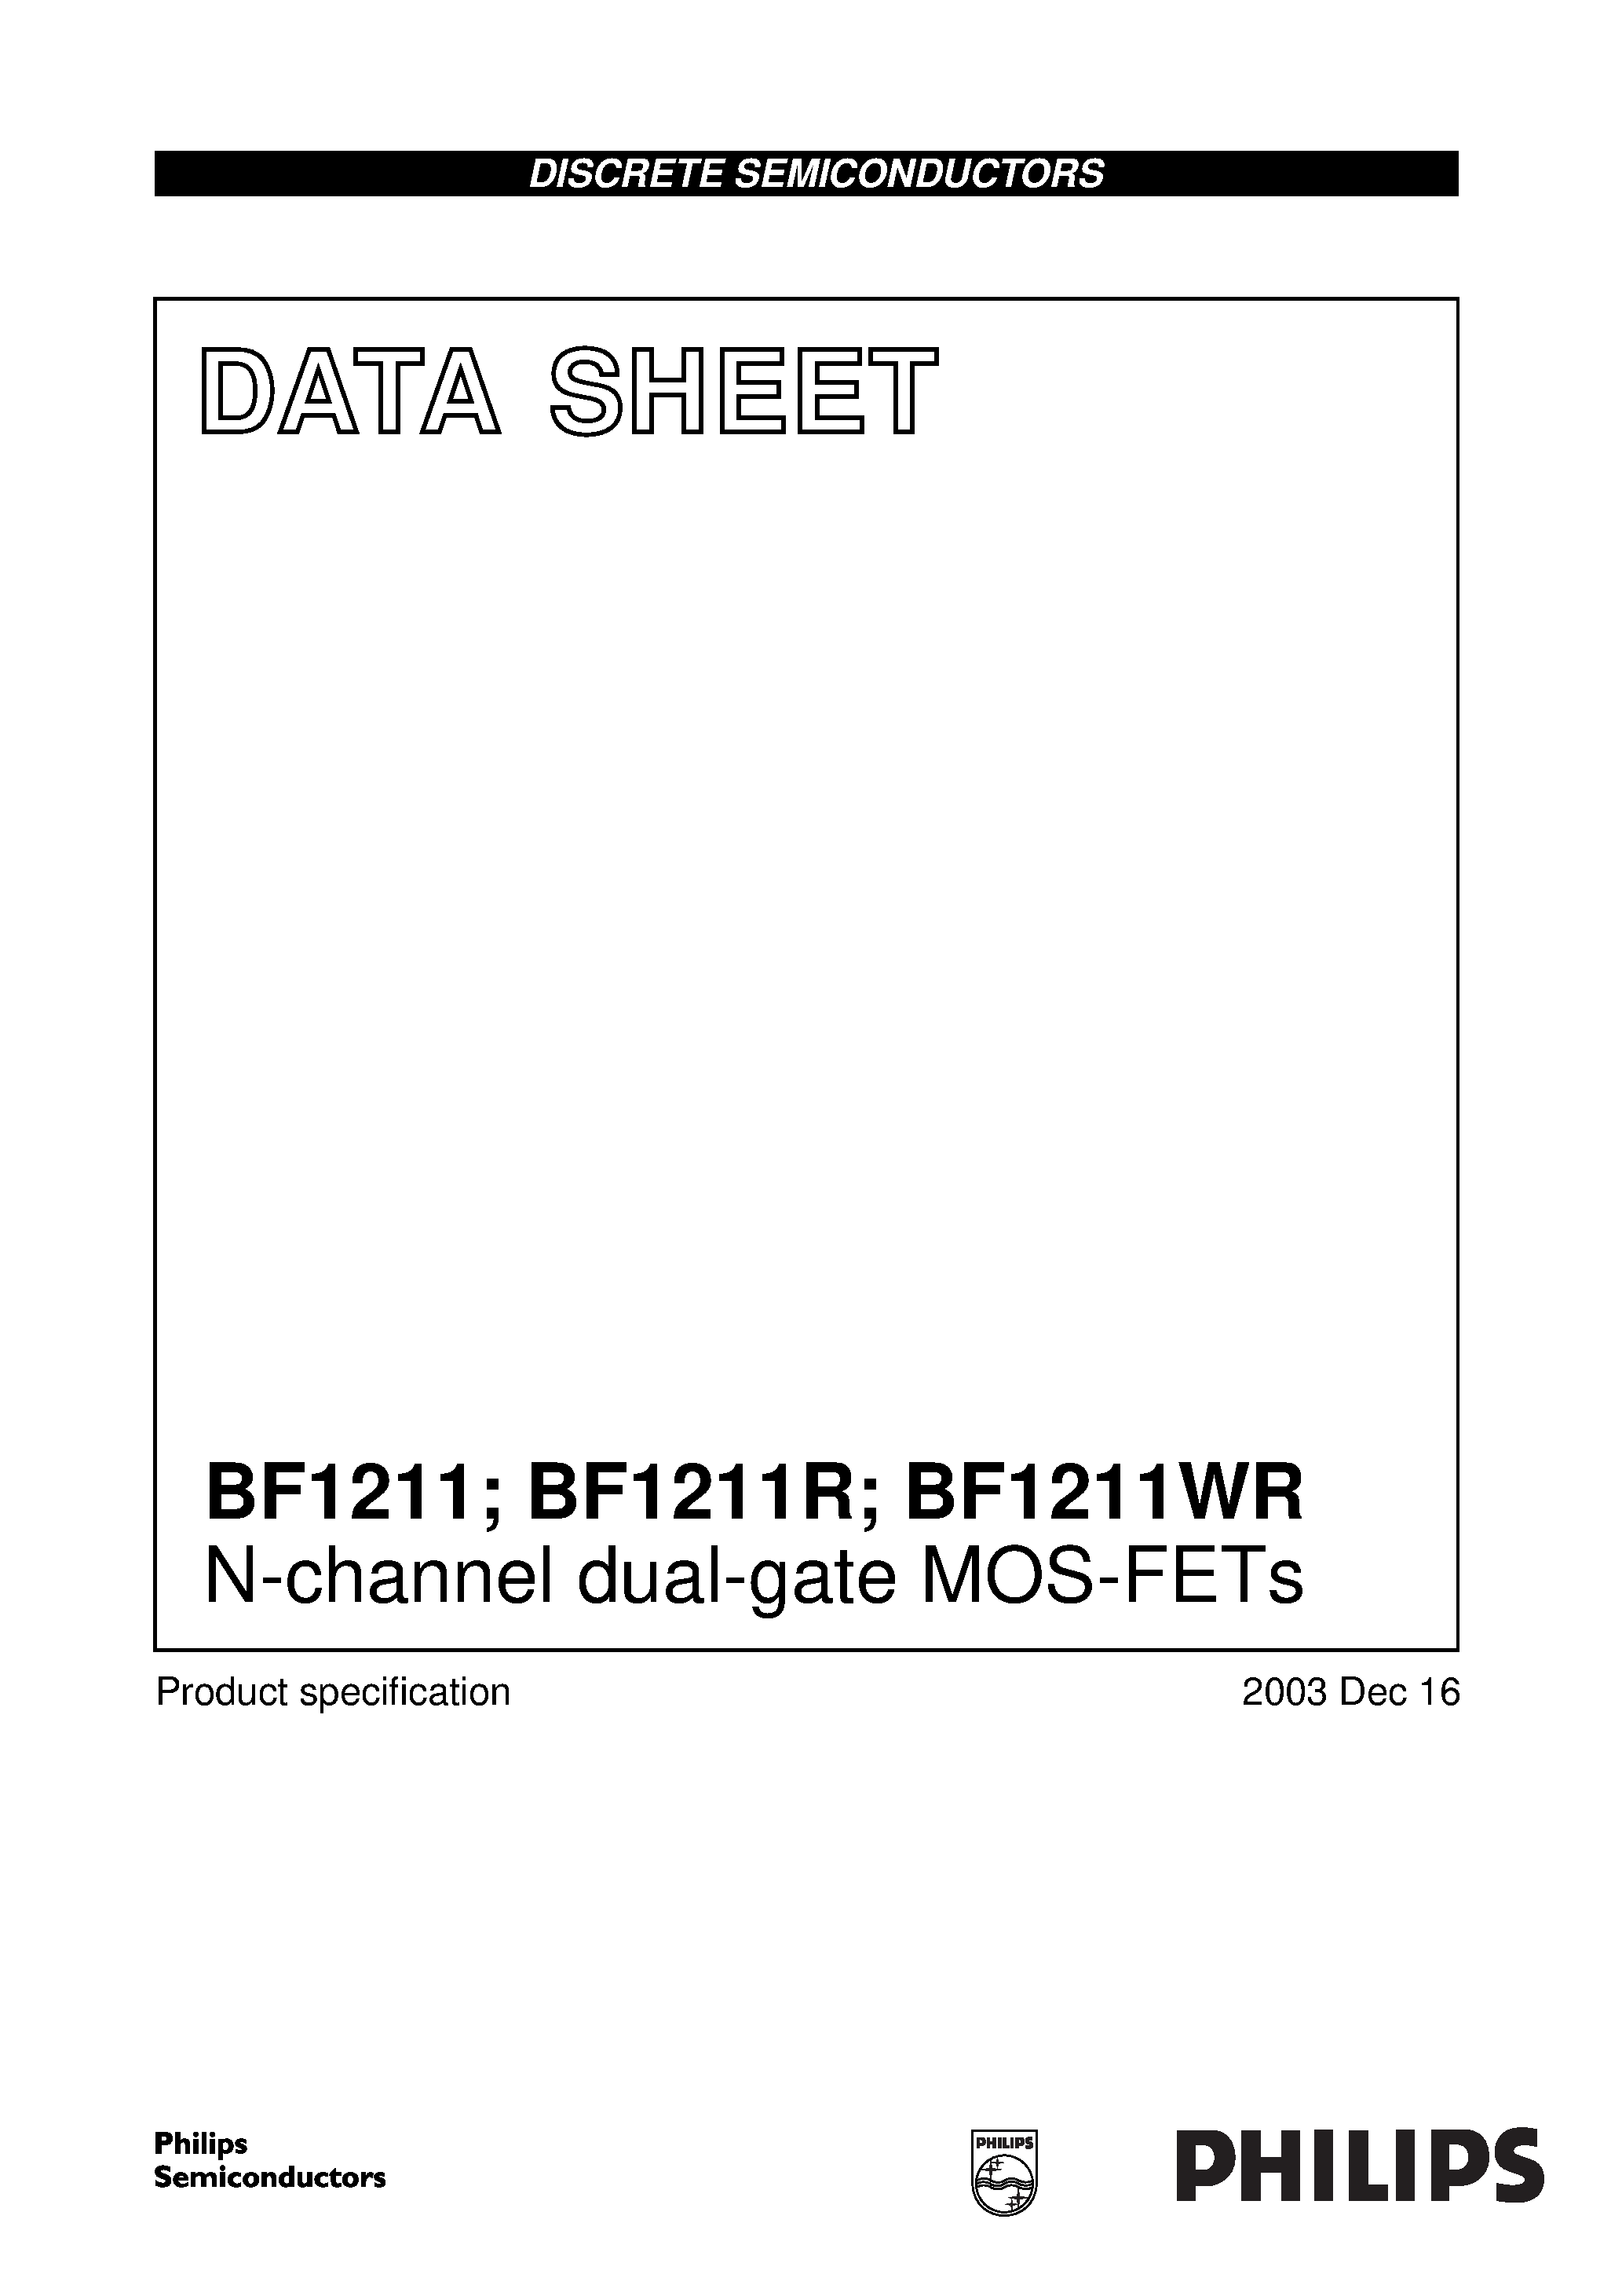 Даташит BF1211WR - N-channel dual-gate MOS-FETs страница 1